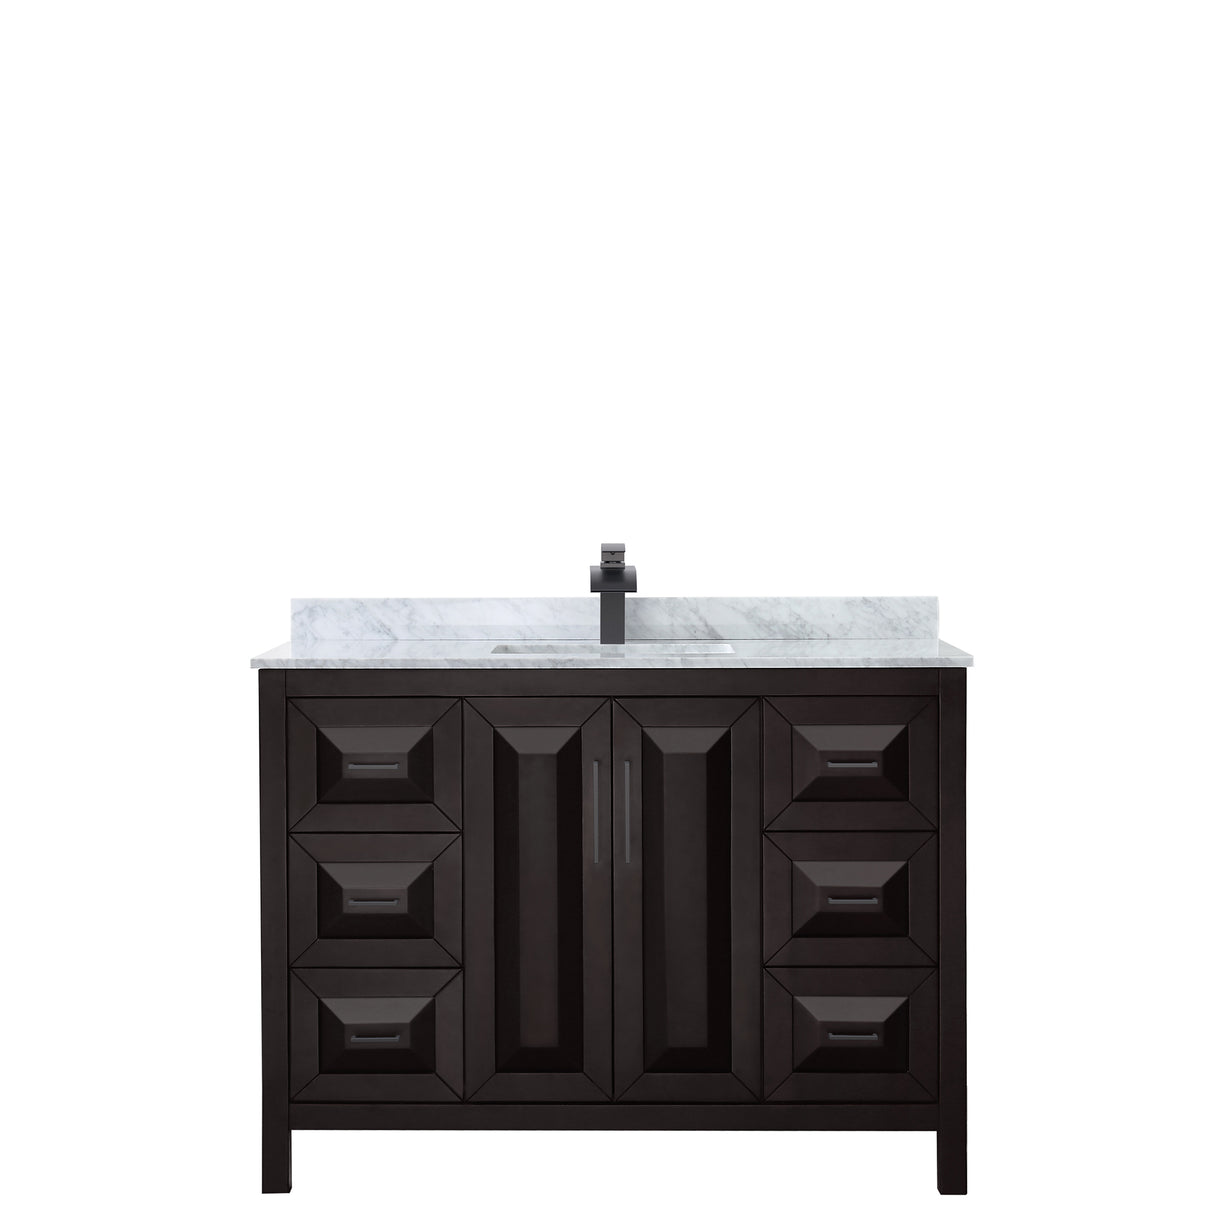 Daria 48 Inch Single Bathroom Vanity in Dark Espresso White Carrara Marble Countertop Undermount Square Sink Matte Black Trim